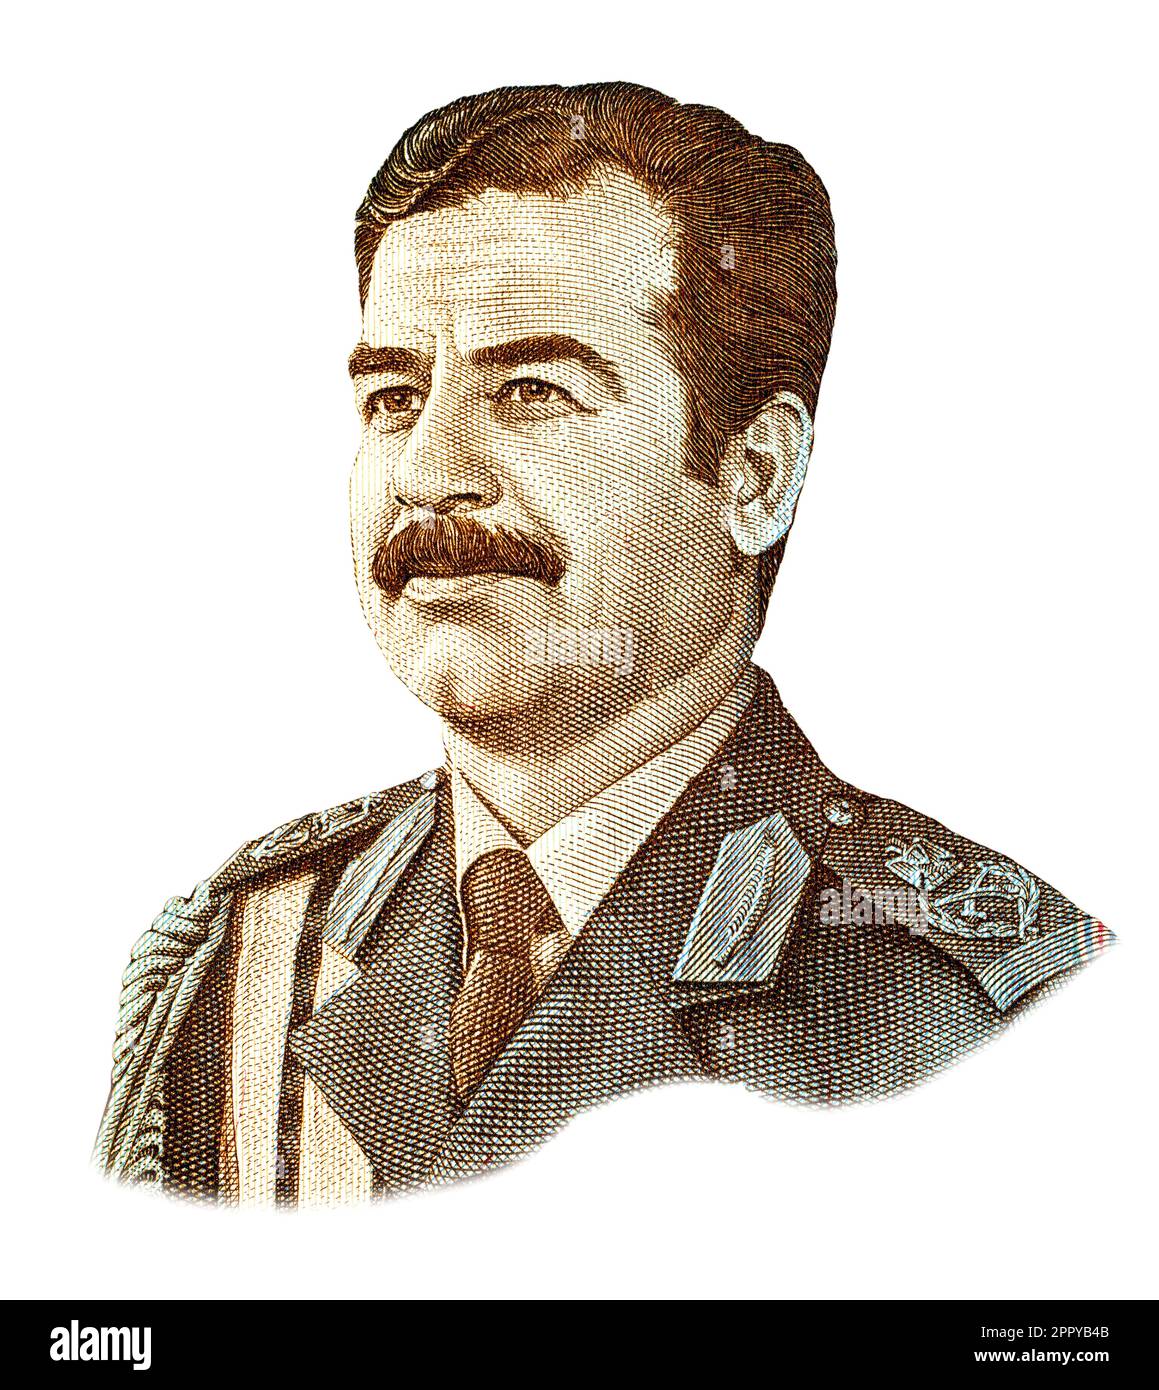 Iraq - circa 1986: Saddam Hussein (1937-2006) ritratto da 25 dinari banconota irachena Foto Stock